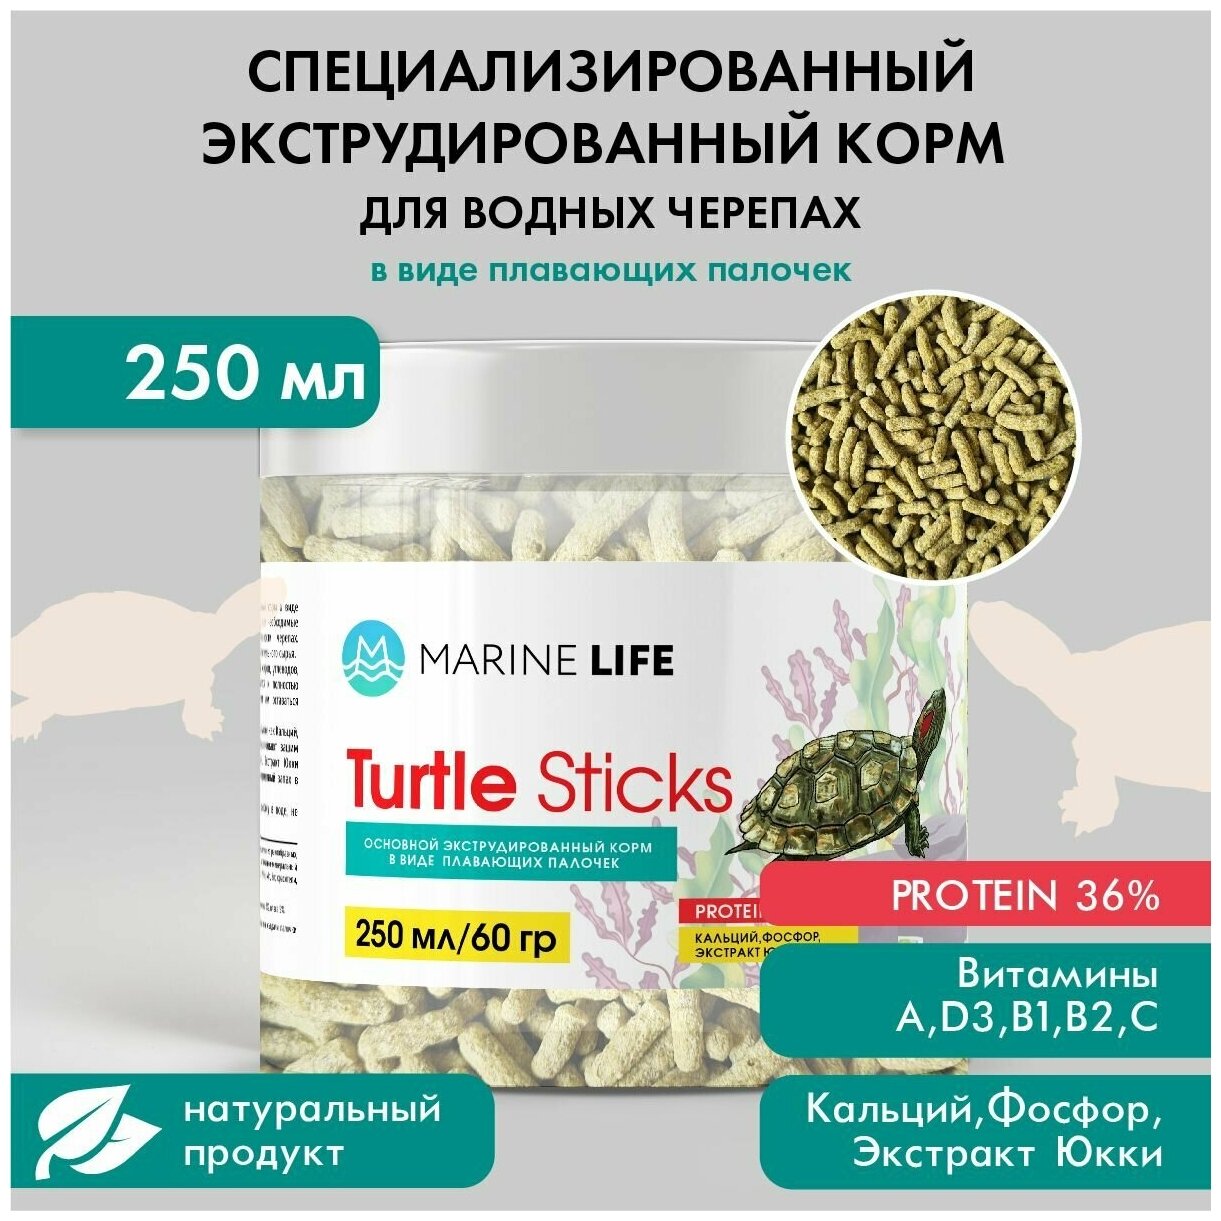 Корм для водных черепах Marine Life Turtle Sticks, 250 мл/60гр